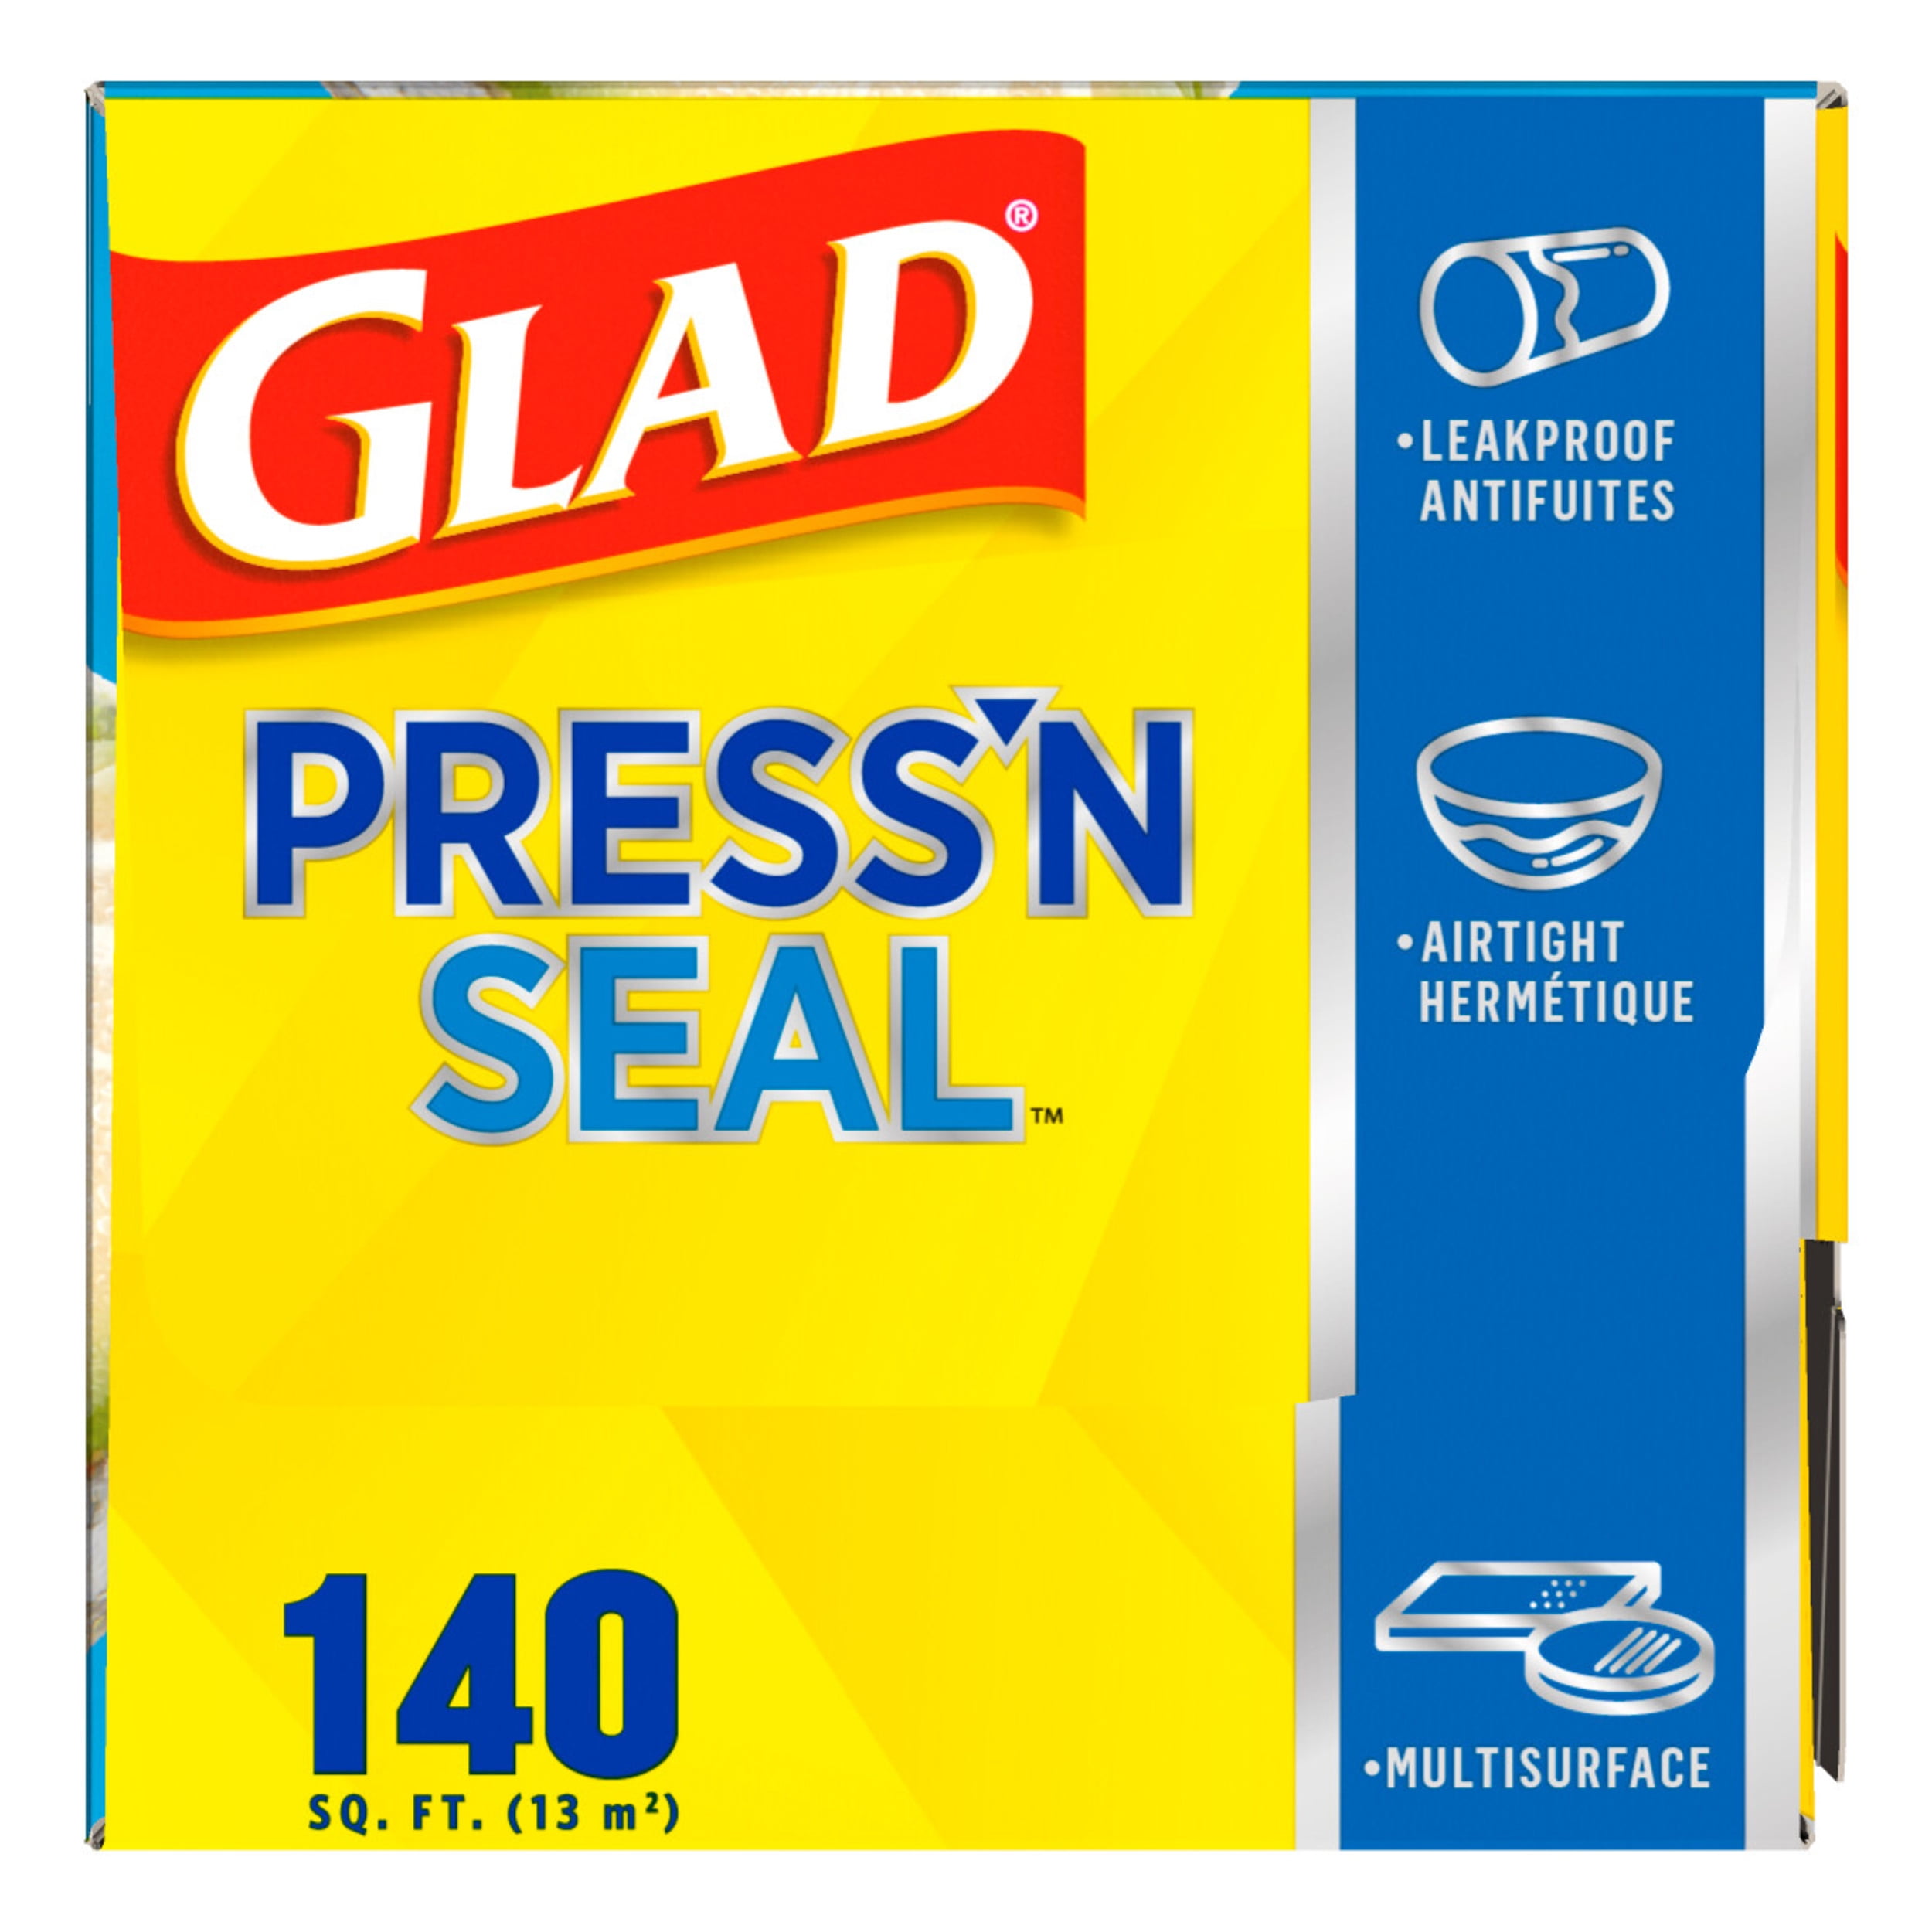 Glad Plastic Food Wrap Variety Pack - Press'n Seal 70 Square Foot